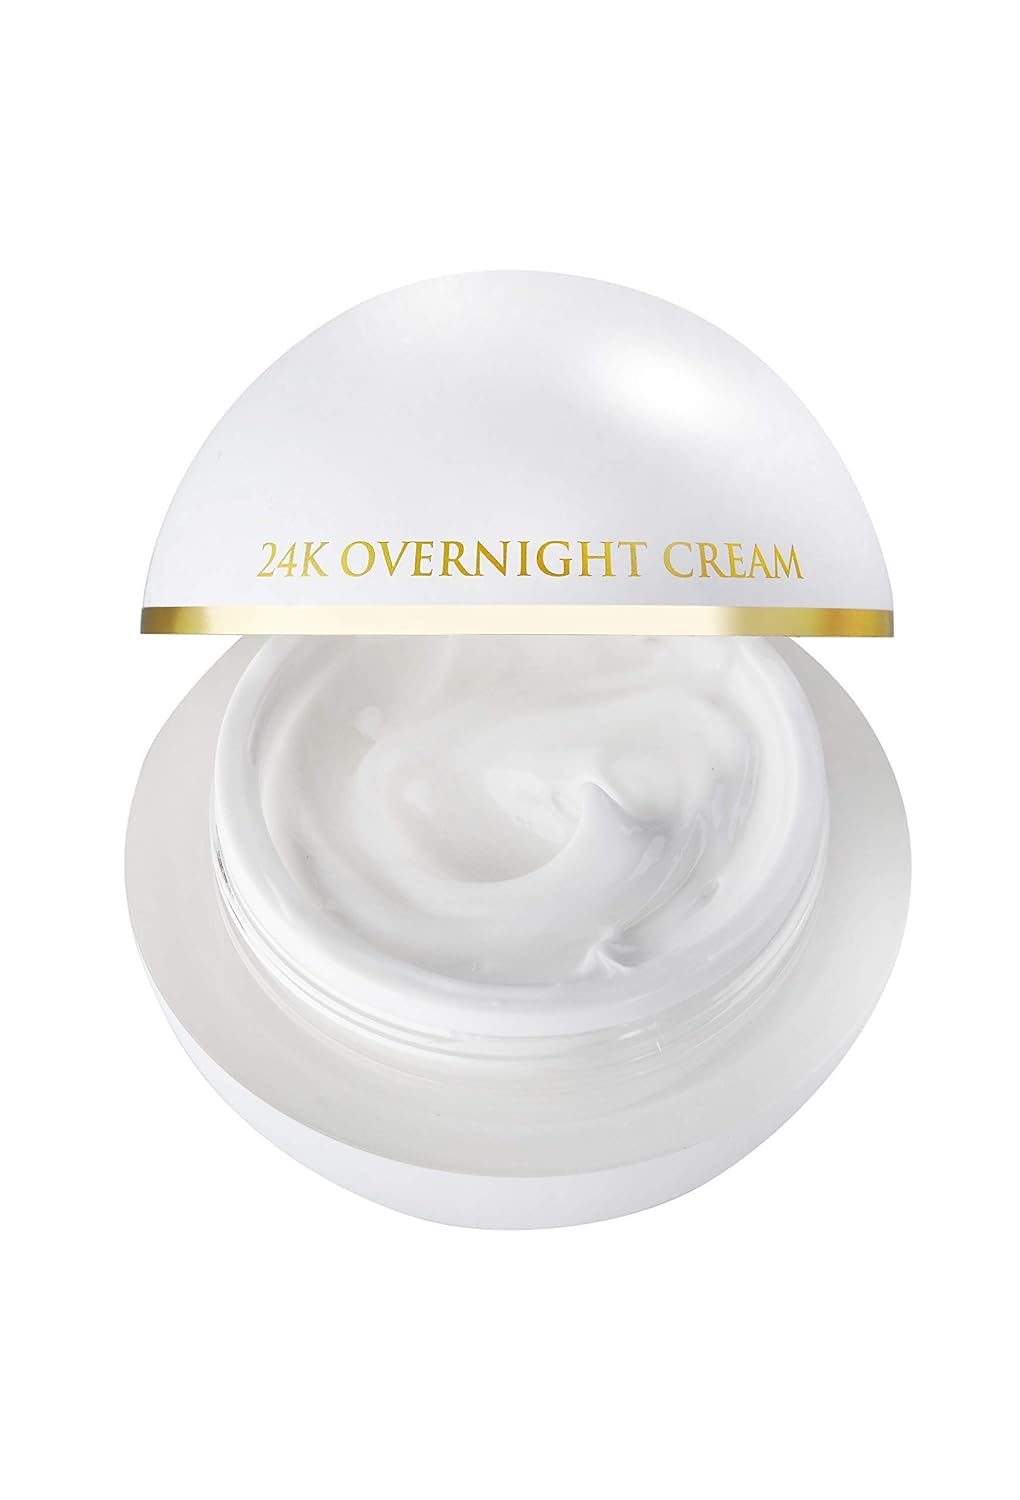 OROGOLD 24K Overnight Cream - 1.76 fl oz